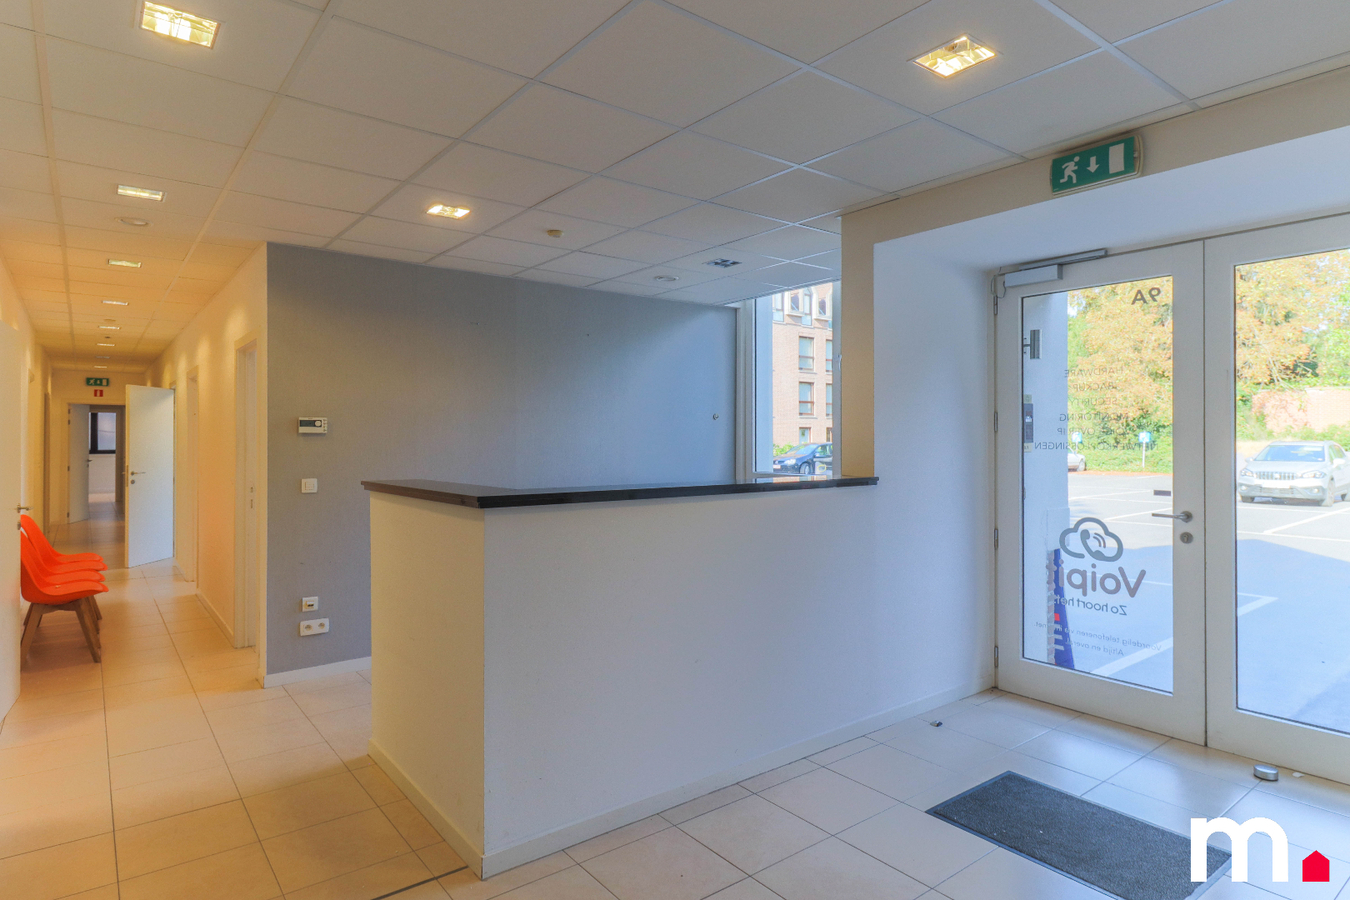 Vernieuwde kantoorruimte van 200m&#178; te koop in centrum van Heule 